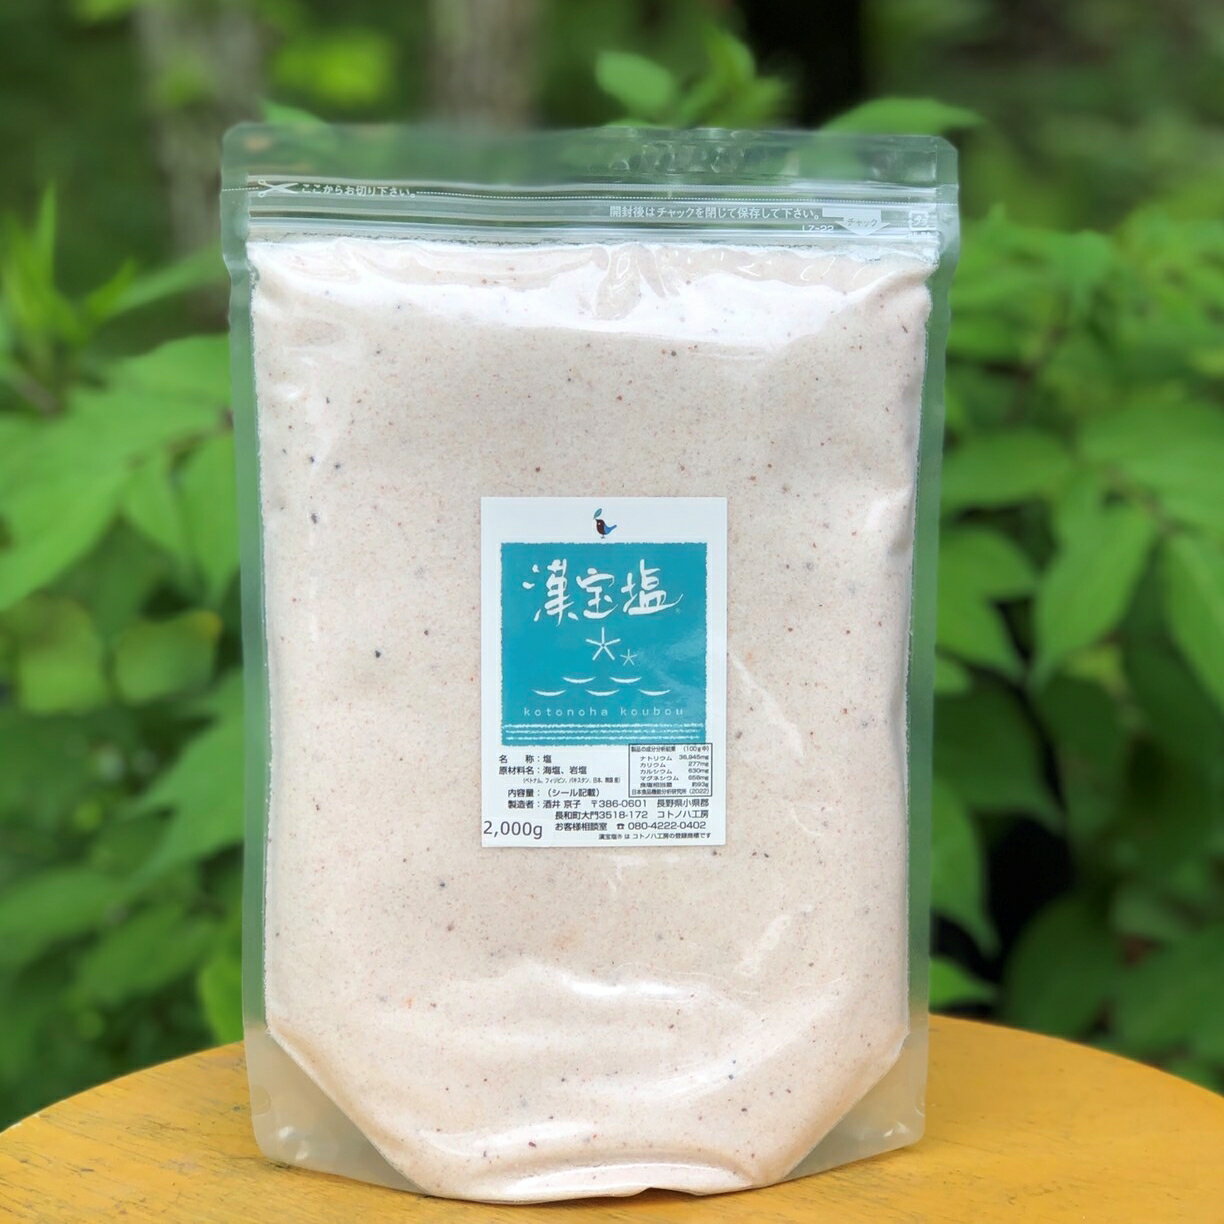 Aromasong Low Sodium Sea Salt - 100% Natural - 68% Less Sodium - Bulk 2.43 Lb Bag - Fine Grain Dead Sea Potassium Chloride with Dead Sea Salt - Used As Table Salt Substitute For Low Sodium Diet